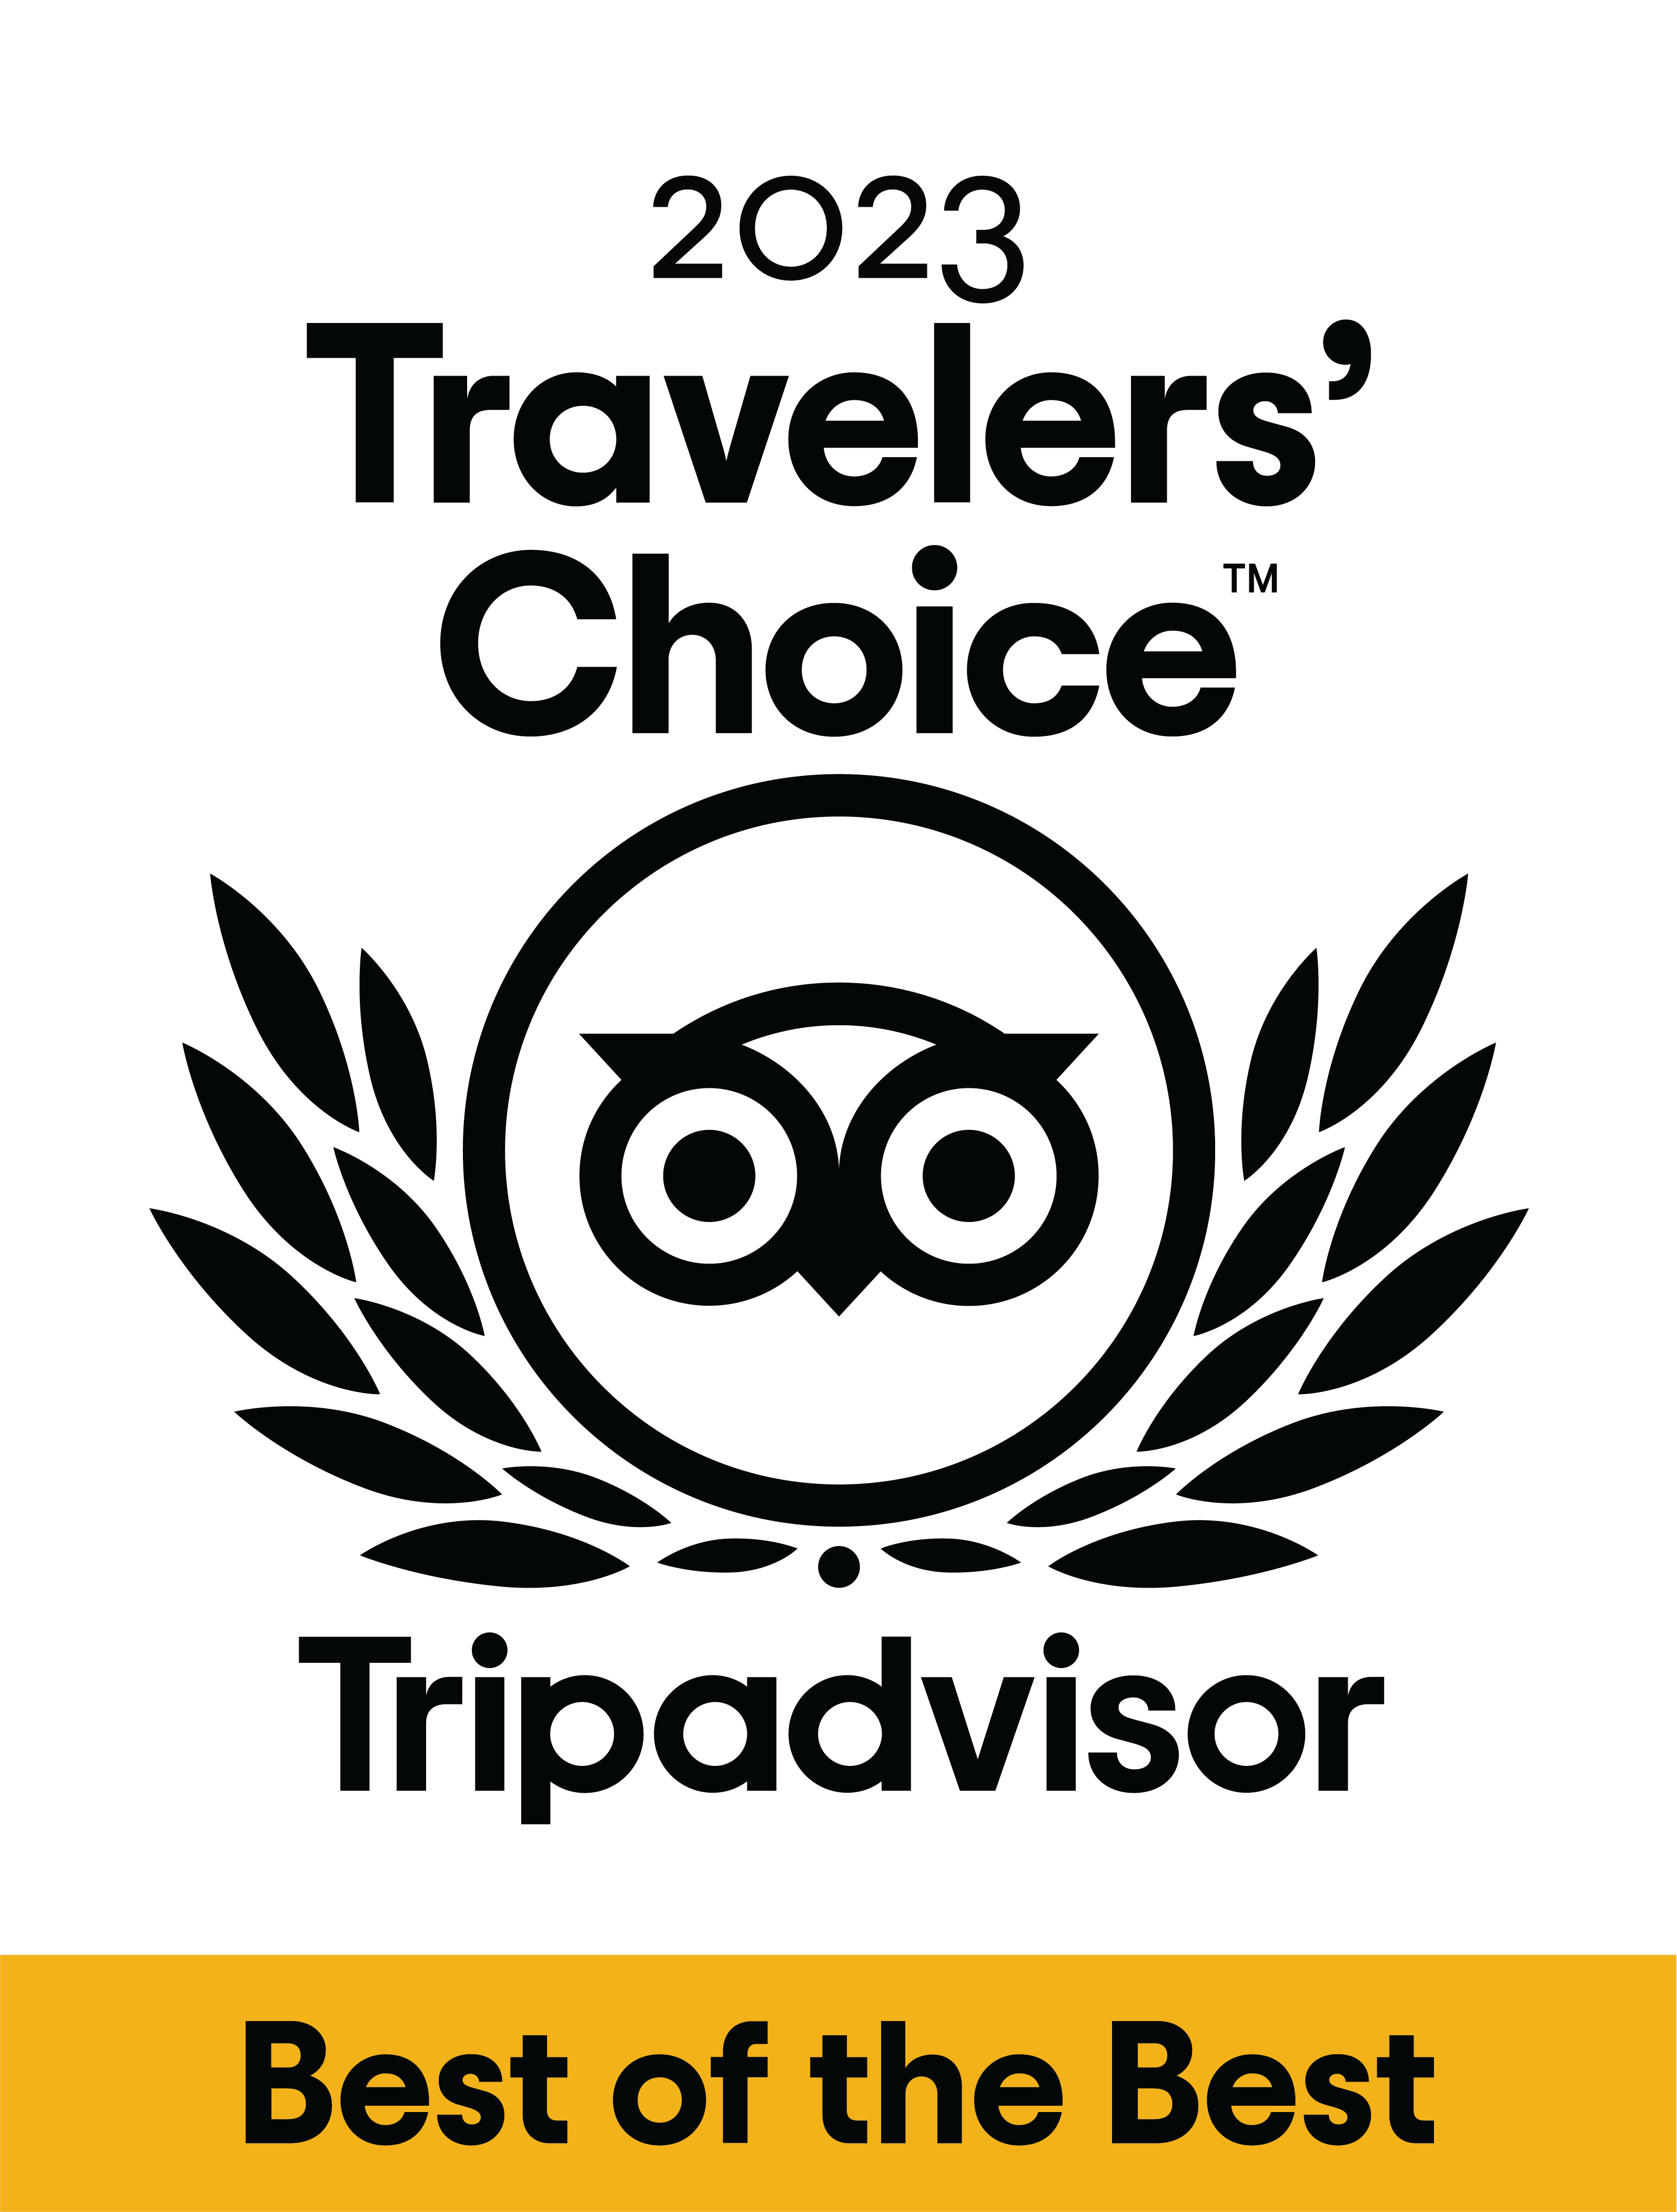 tripadvisor Best of the Best Emblem